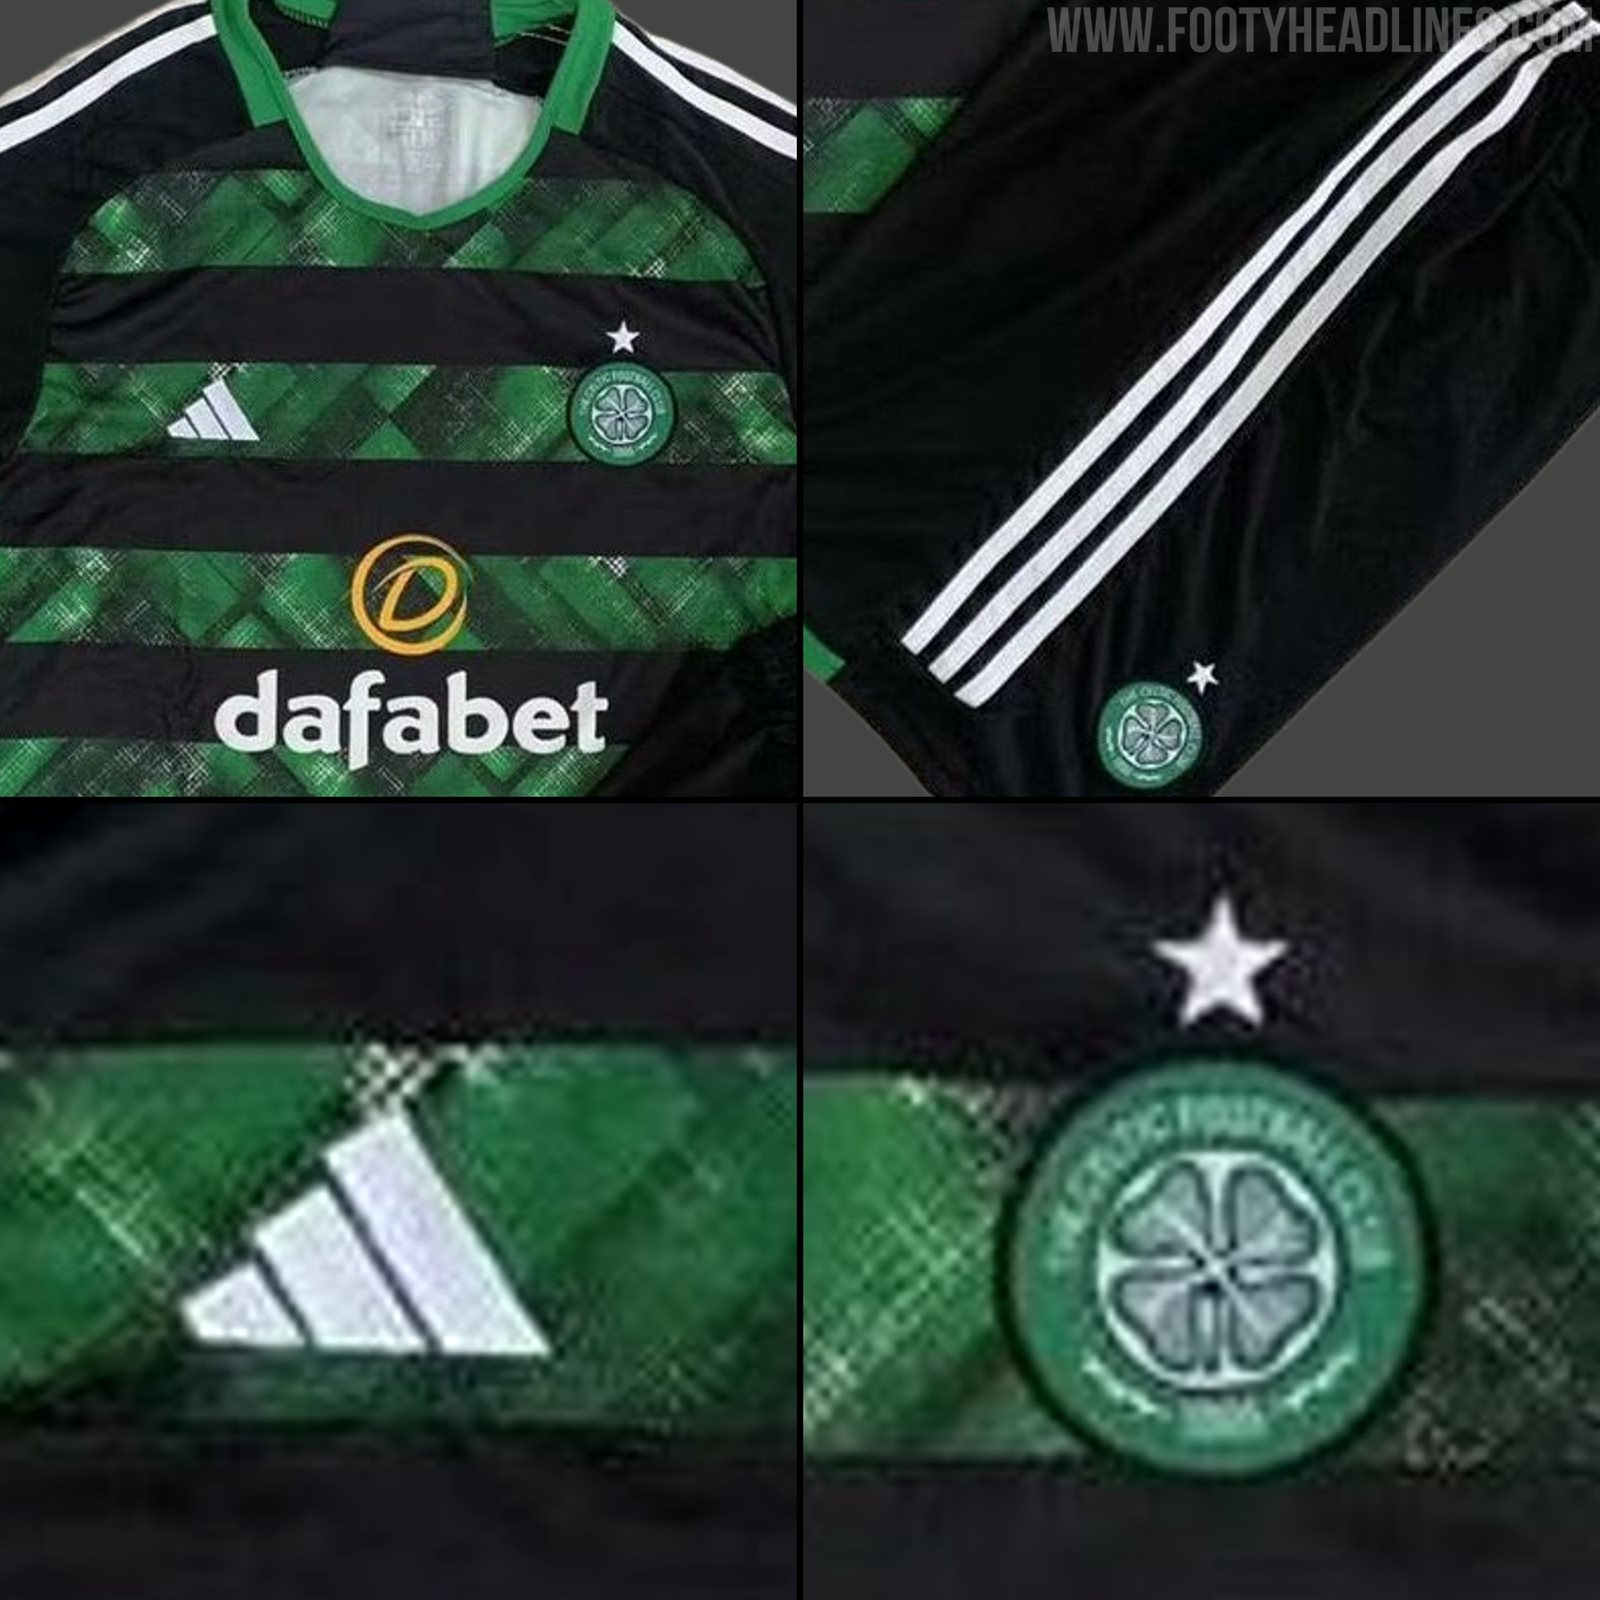 Celtic 21-22 Home Kit Released - Footy Headlines